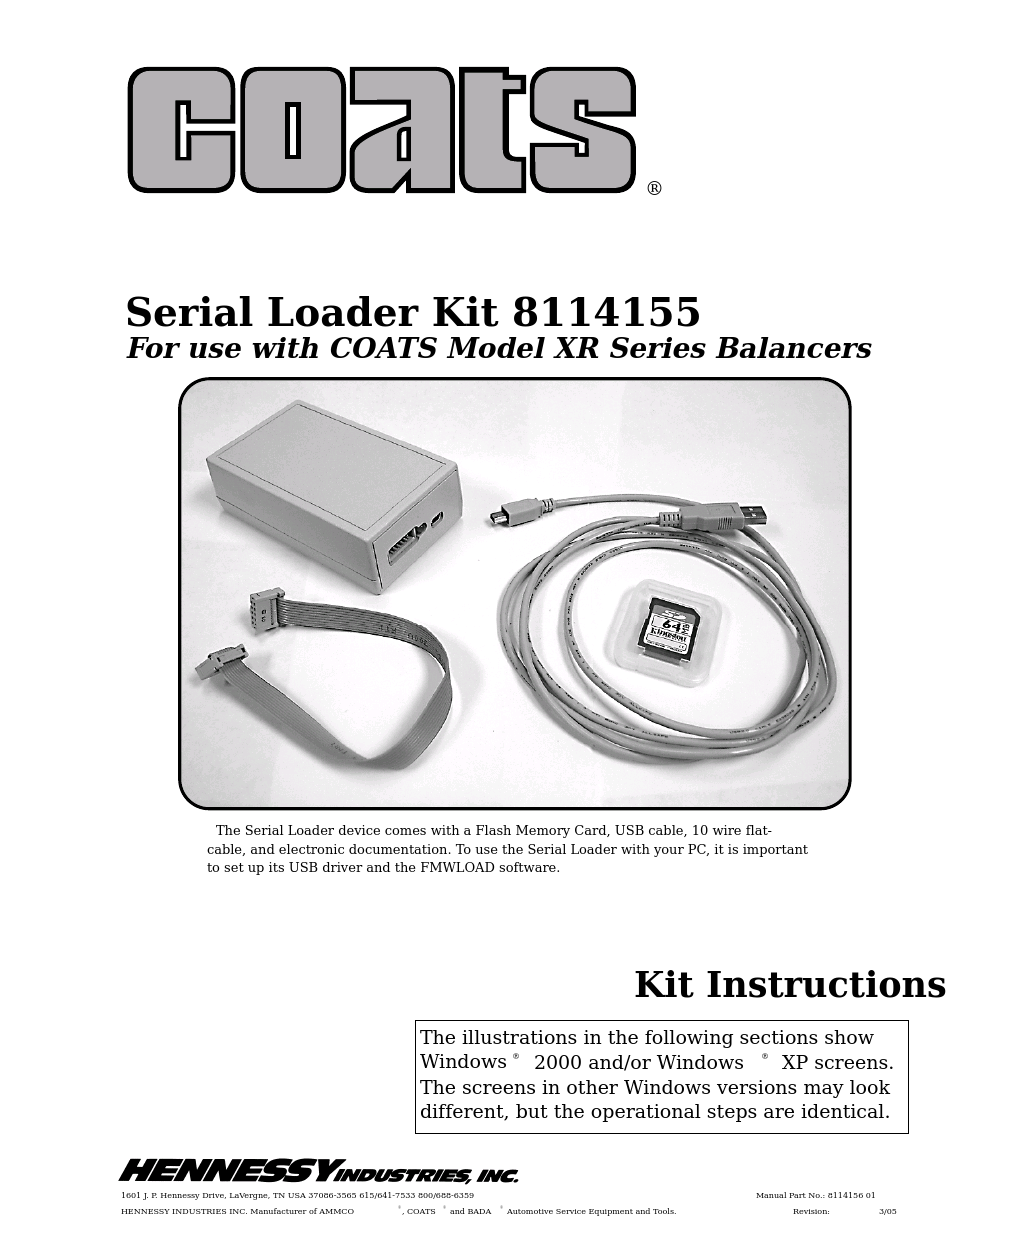 Kit 8114155 Serial Loader